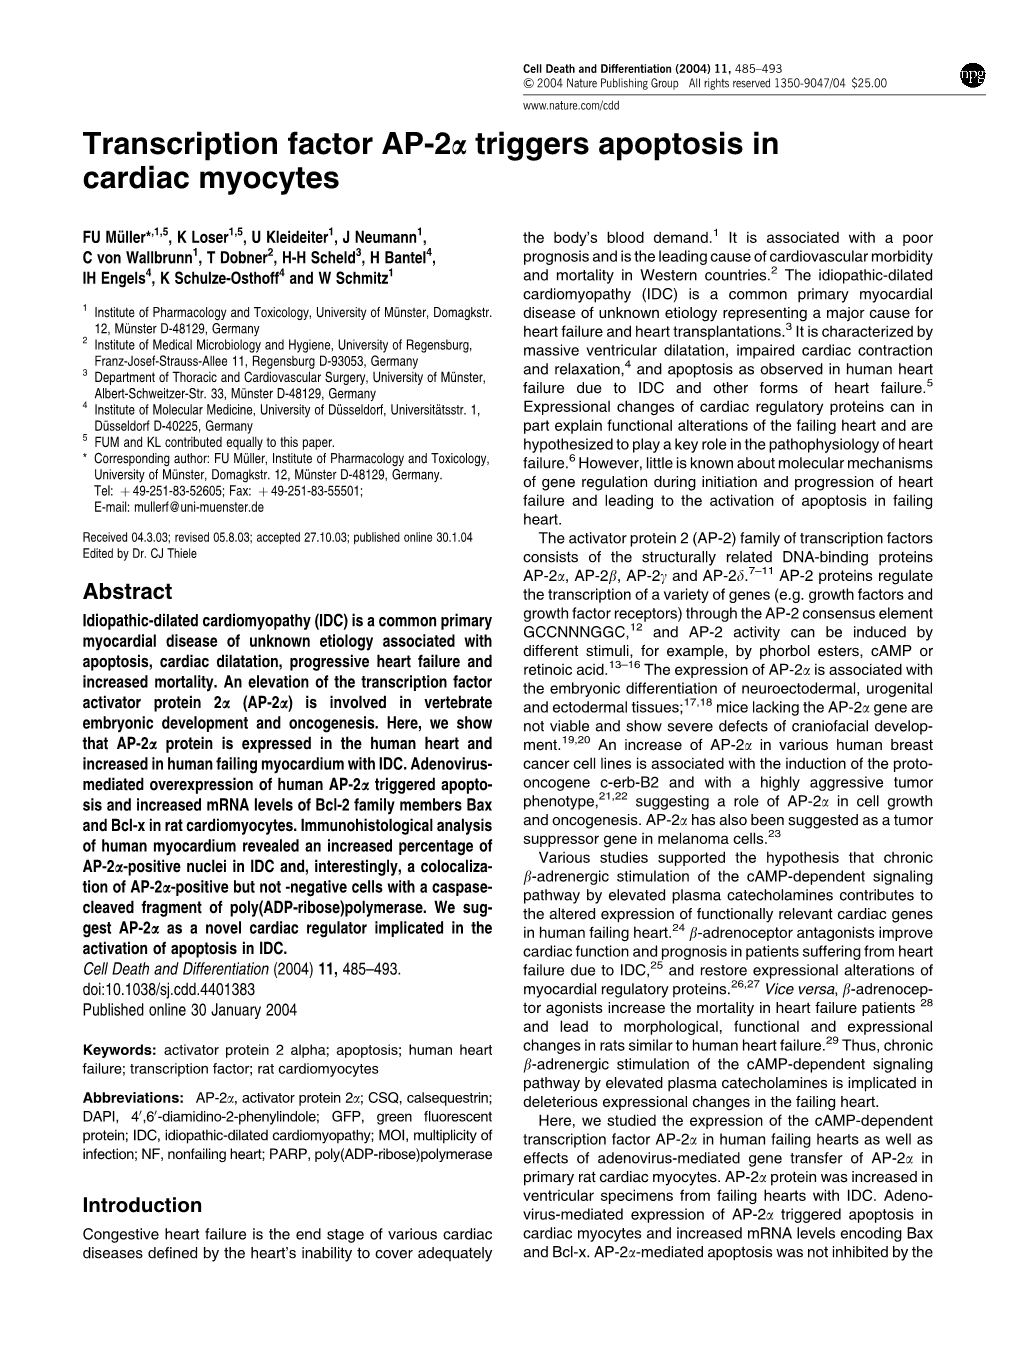 Transcription Factor AP-2A Triggers Apoptosis in Cardiac Myocytes